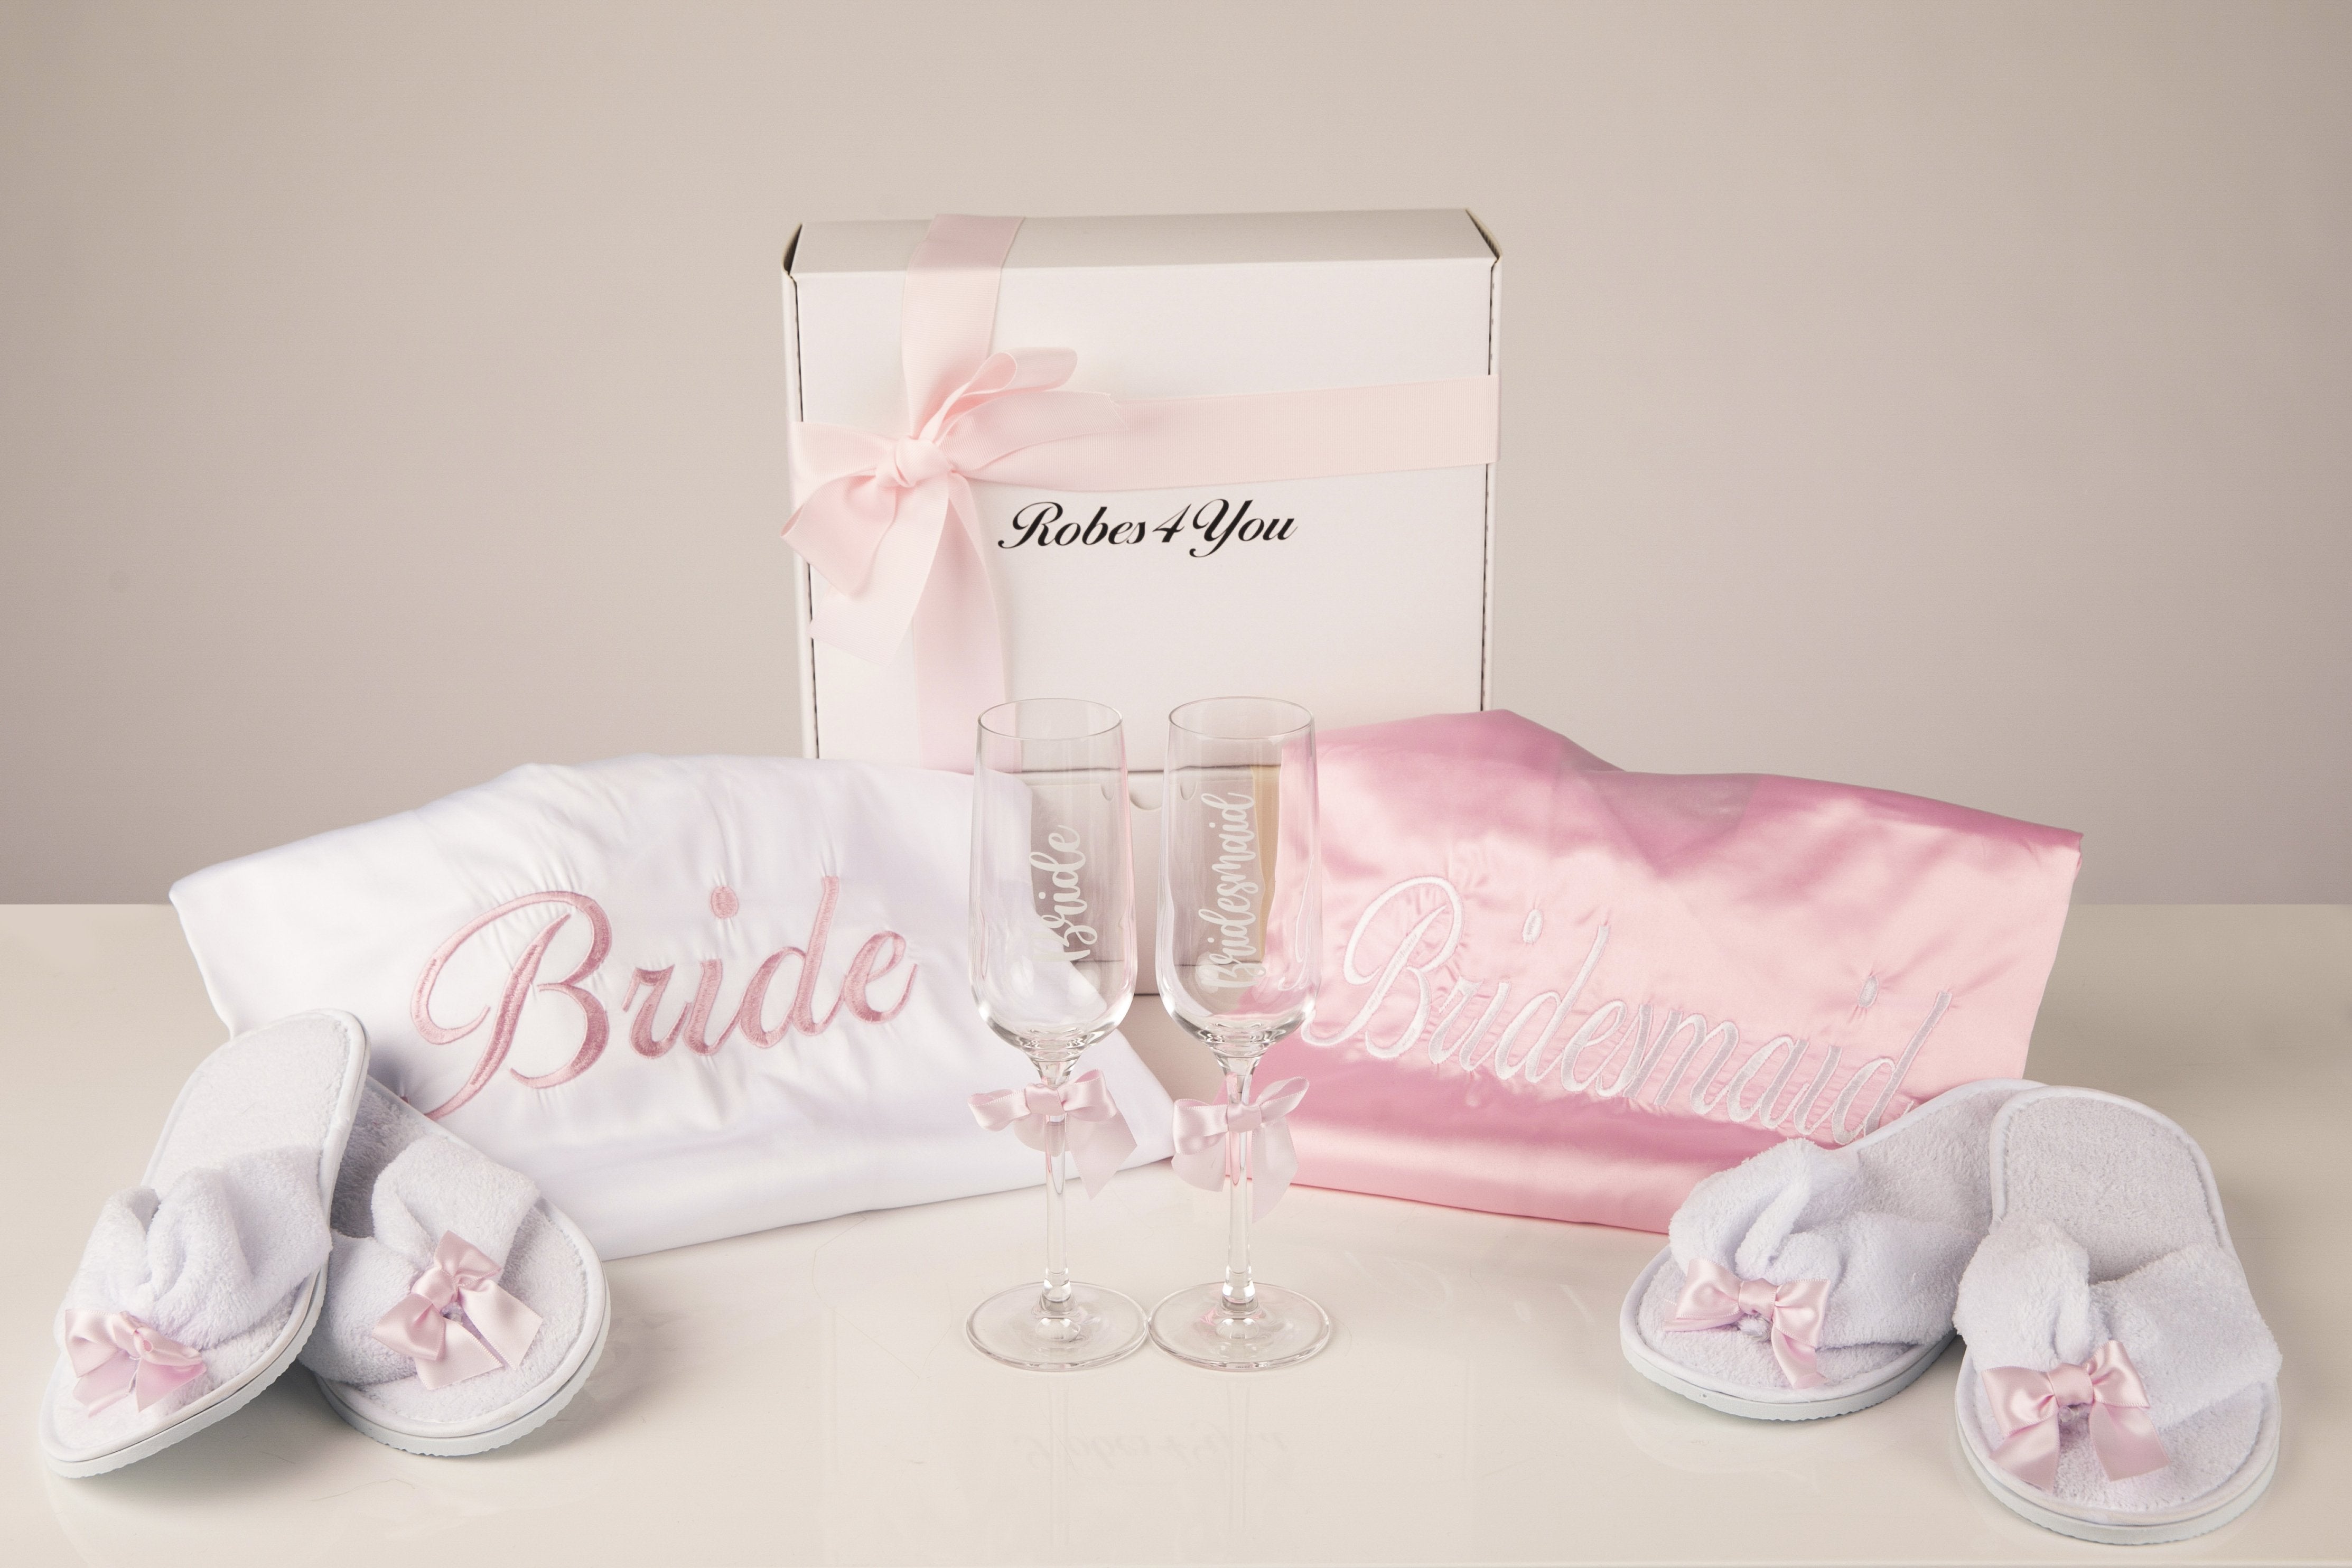 Robes4you gift box-baby pink satin robes